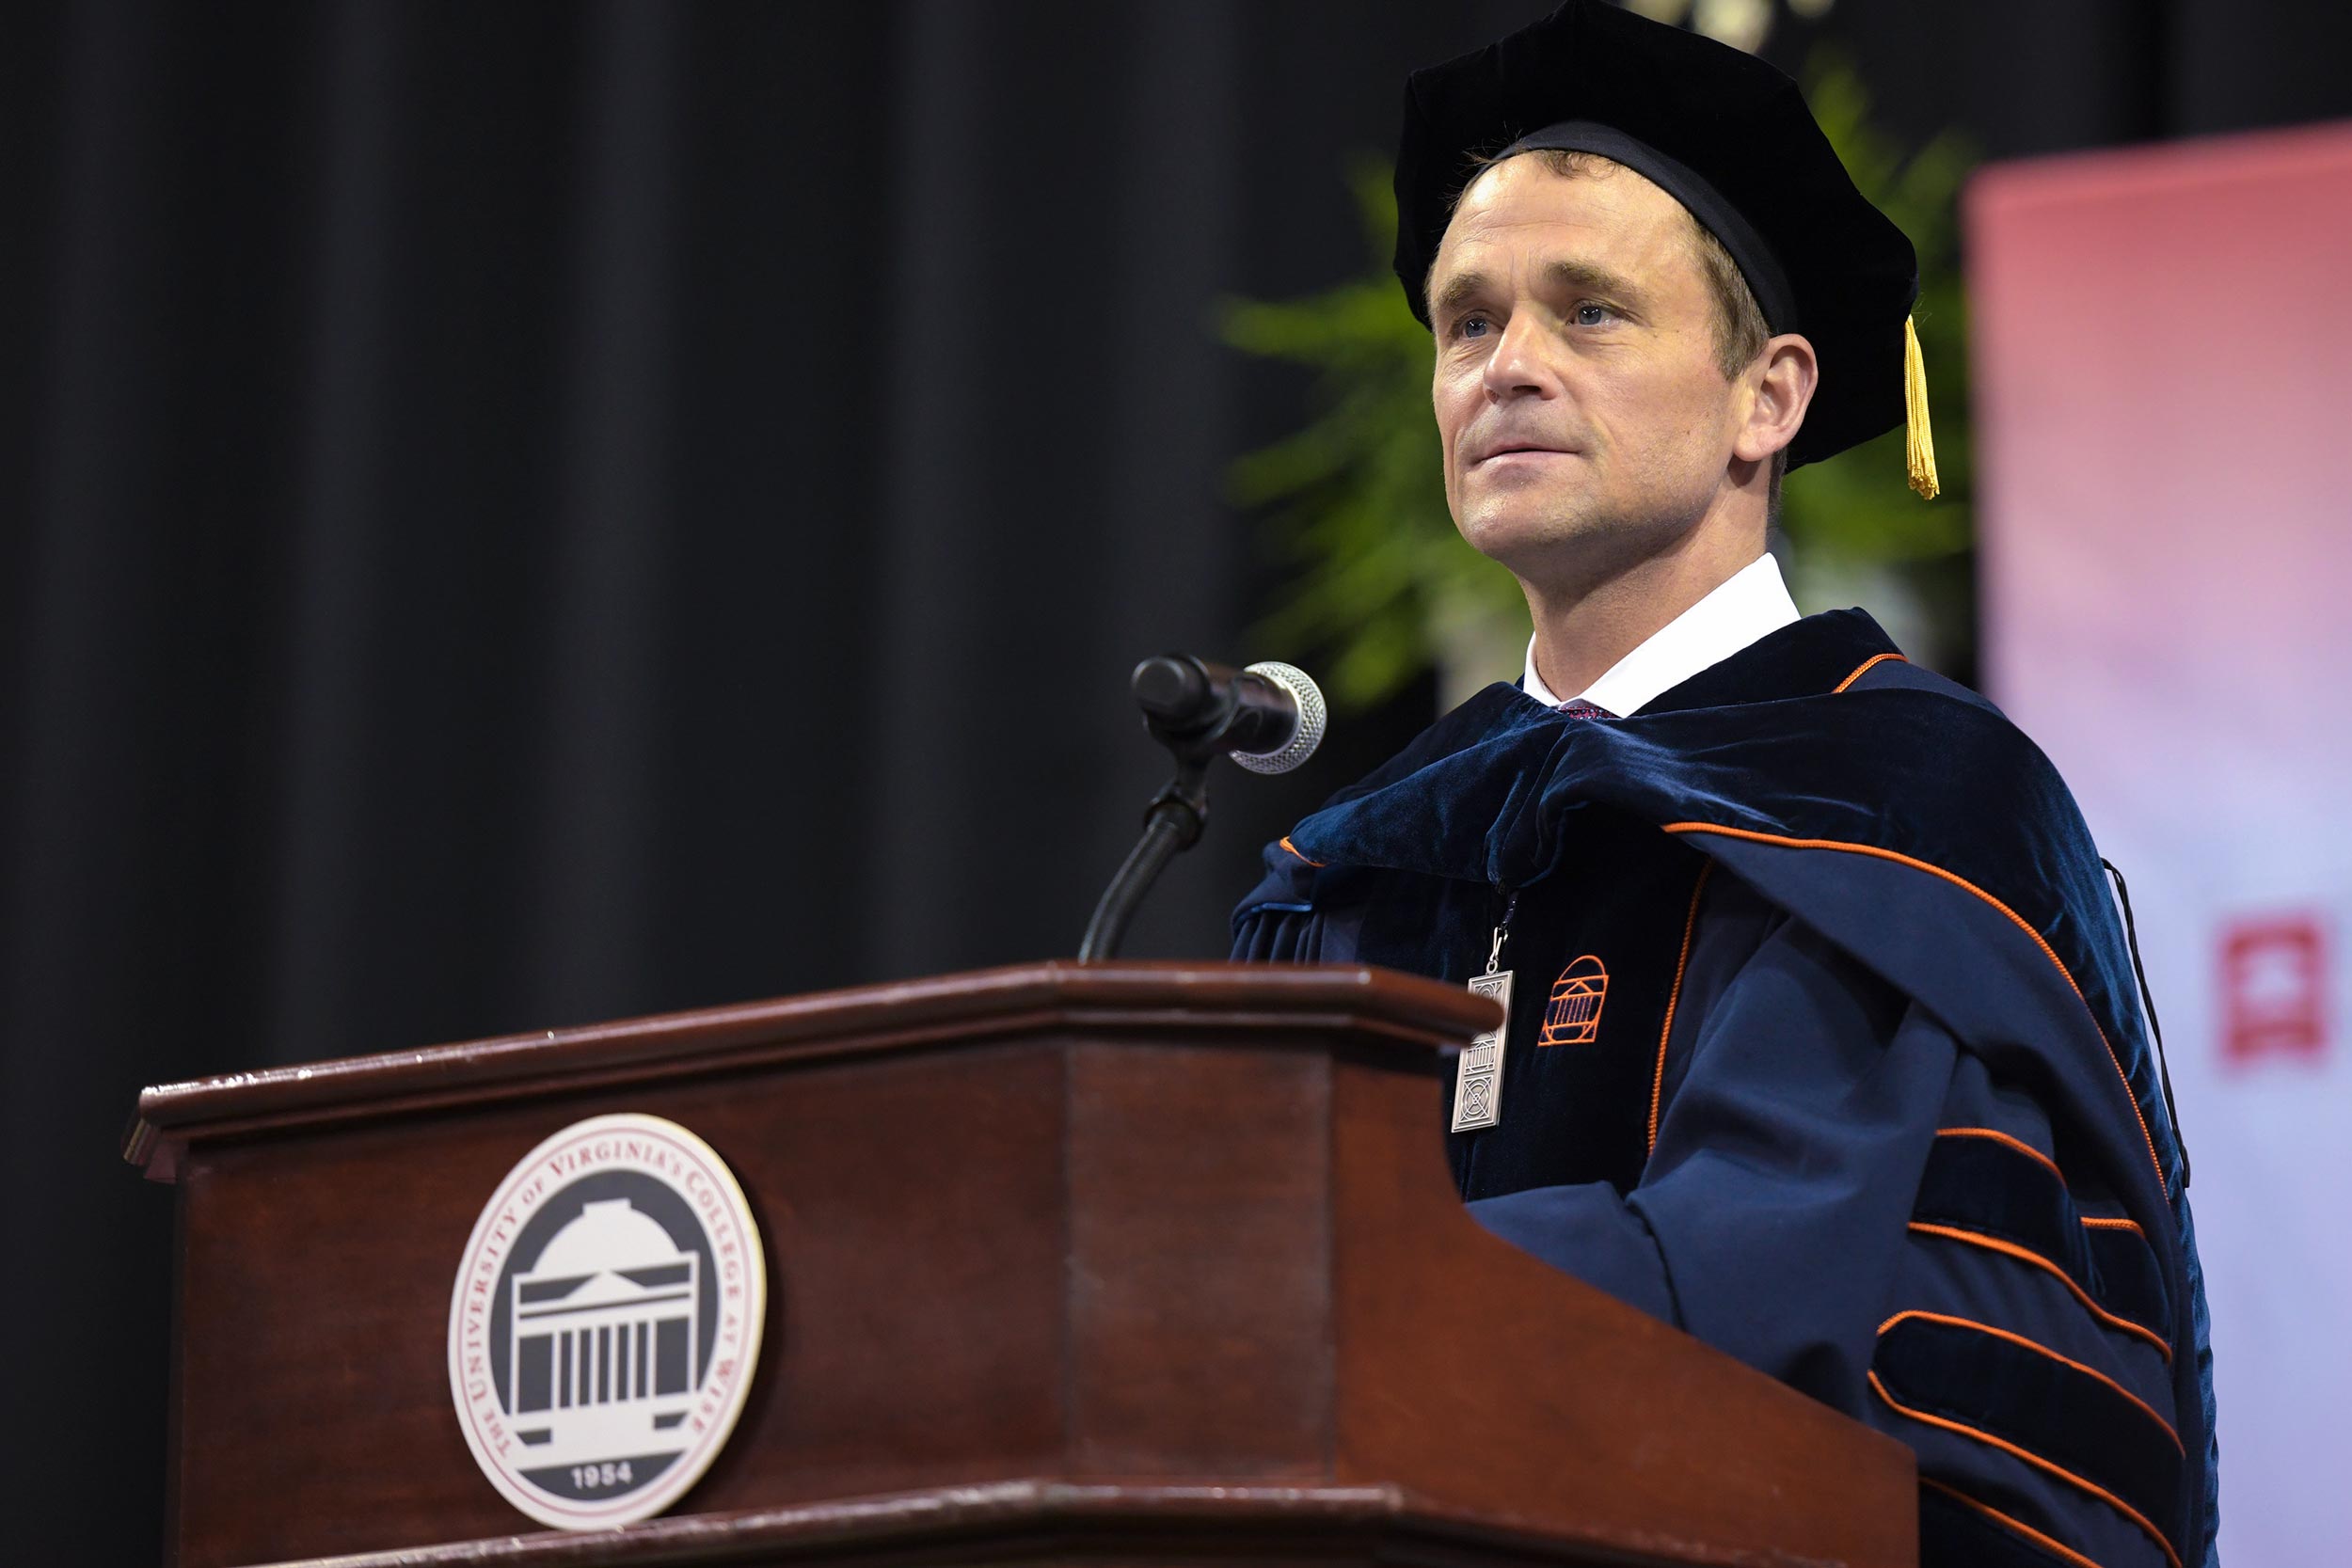 President Jim Ryan in graduation attire standing at a podium